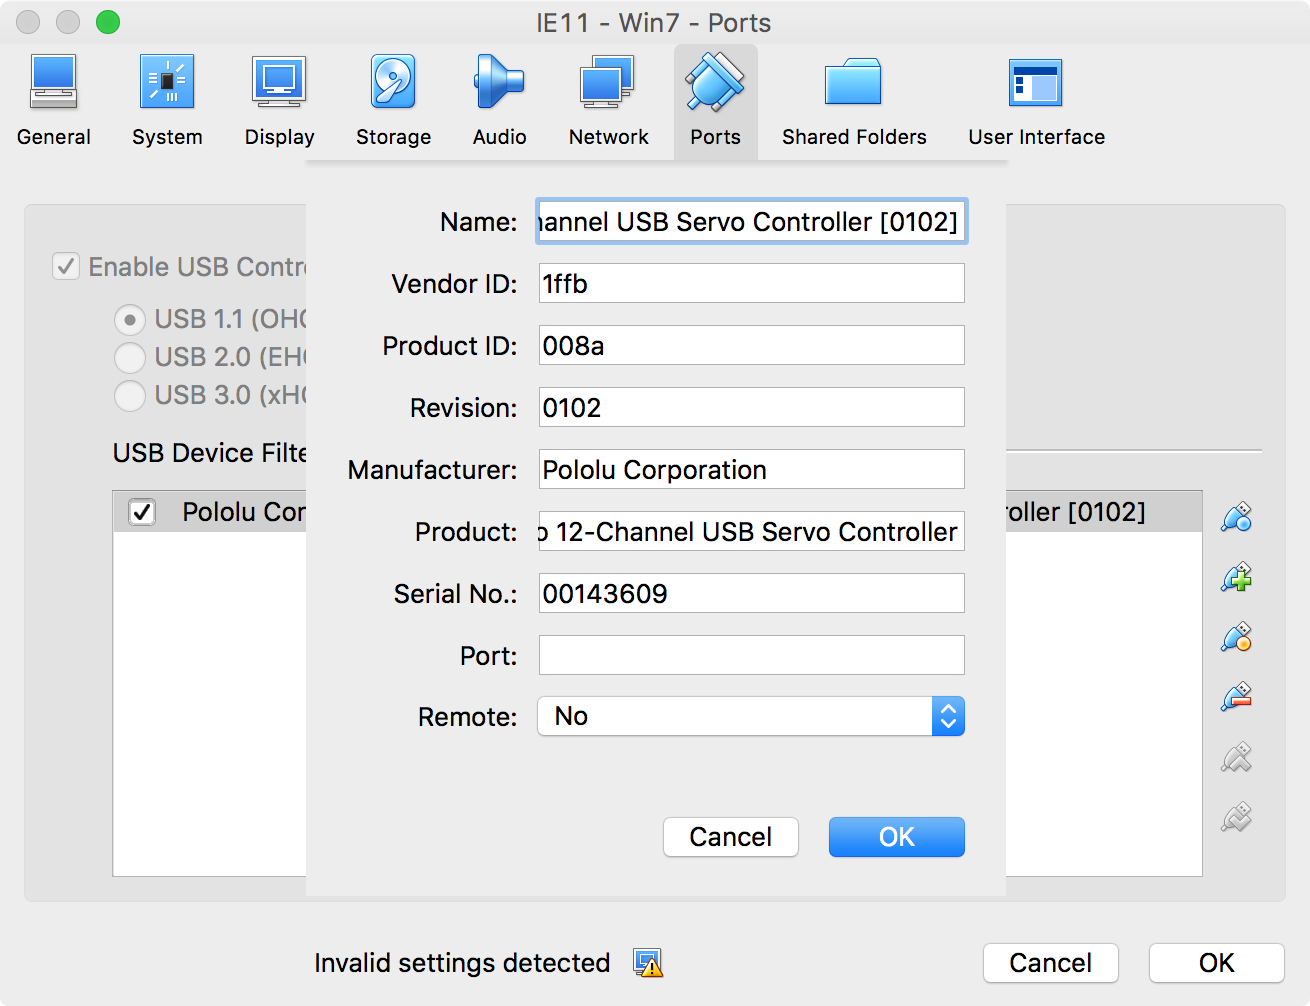 Creating a new USB Device Filter in VirtualBox for the Pololu Mini Maestro